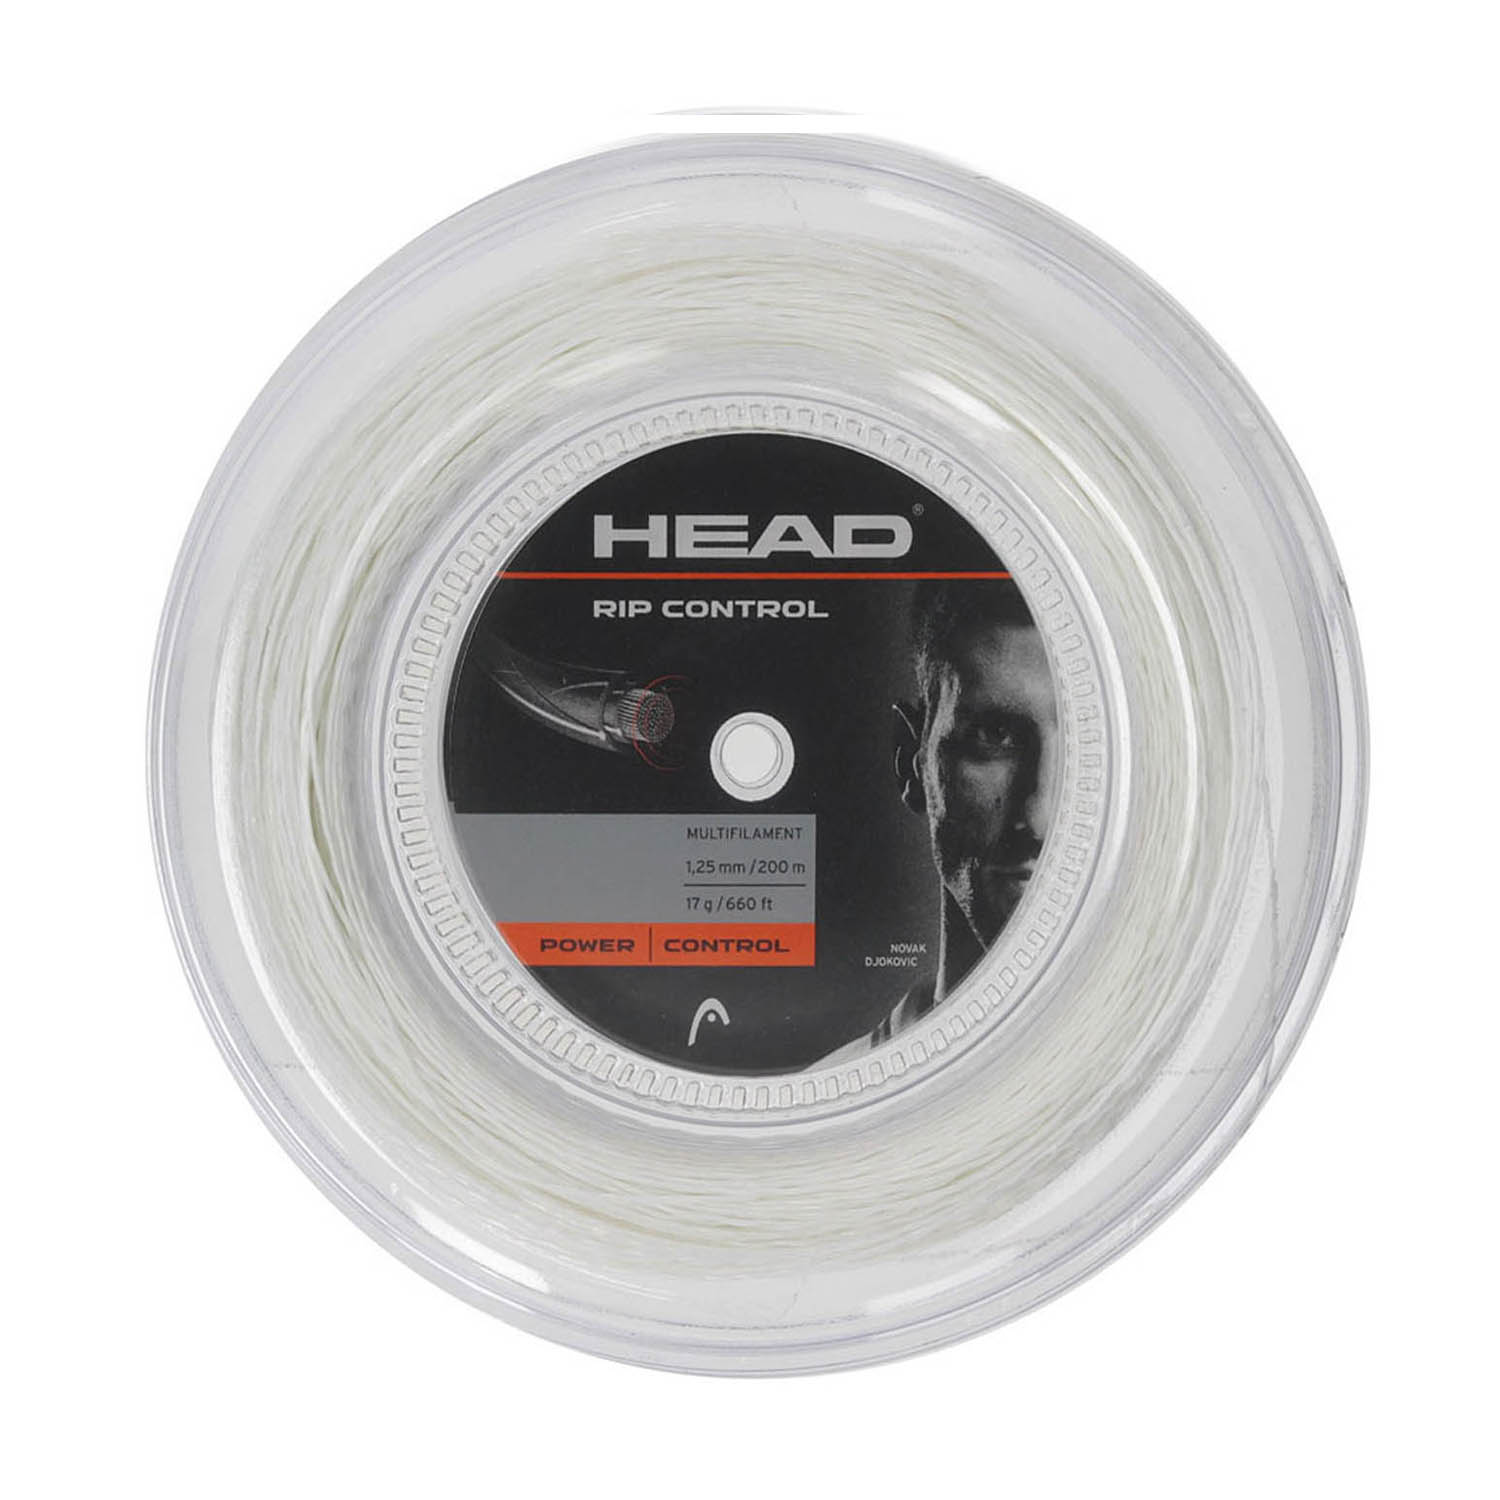 Head Rip Control 1.25 200 m Reel - White